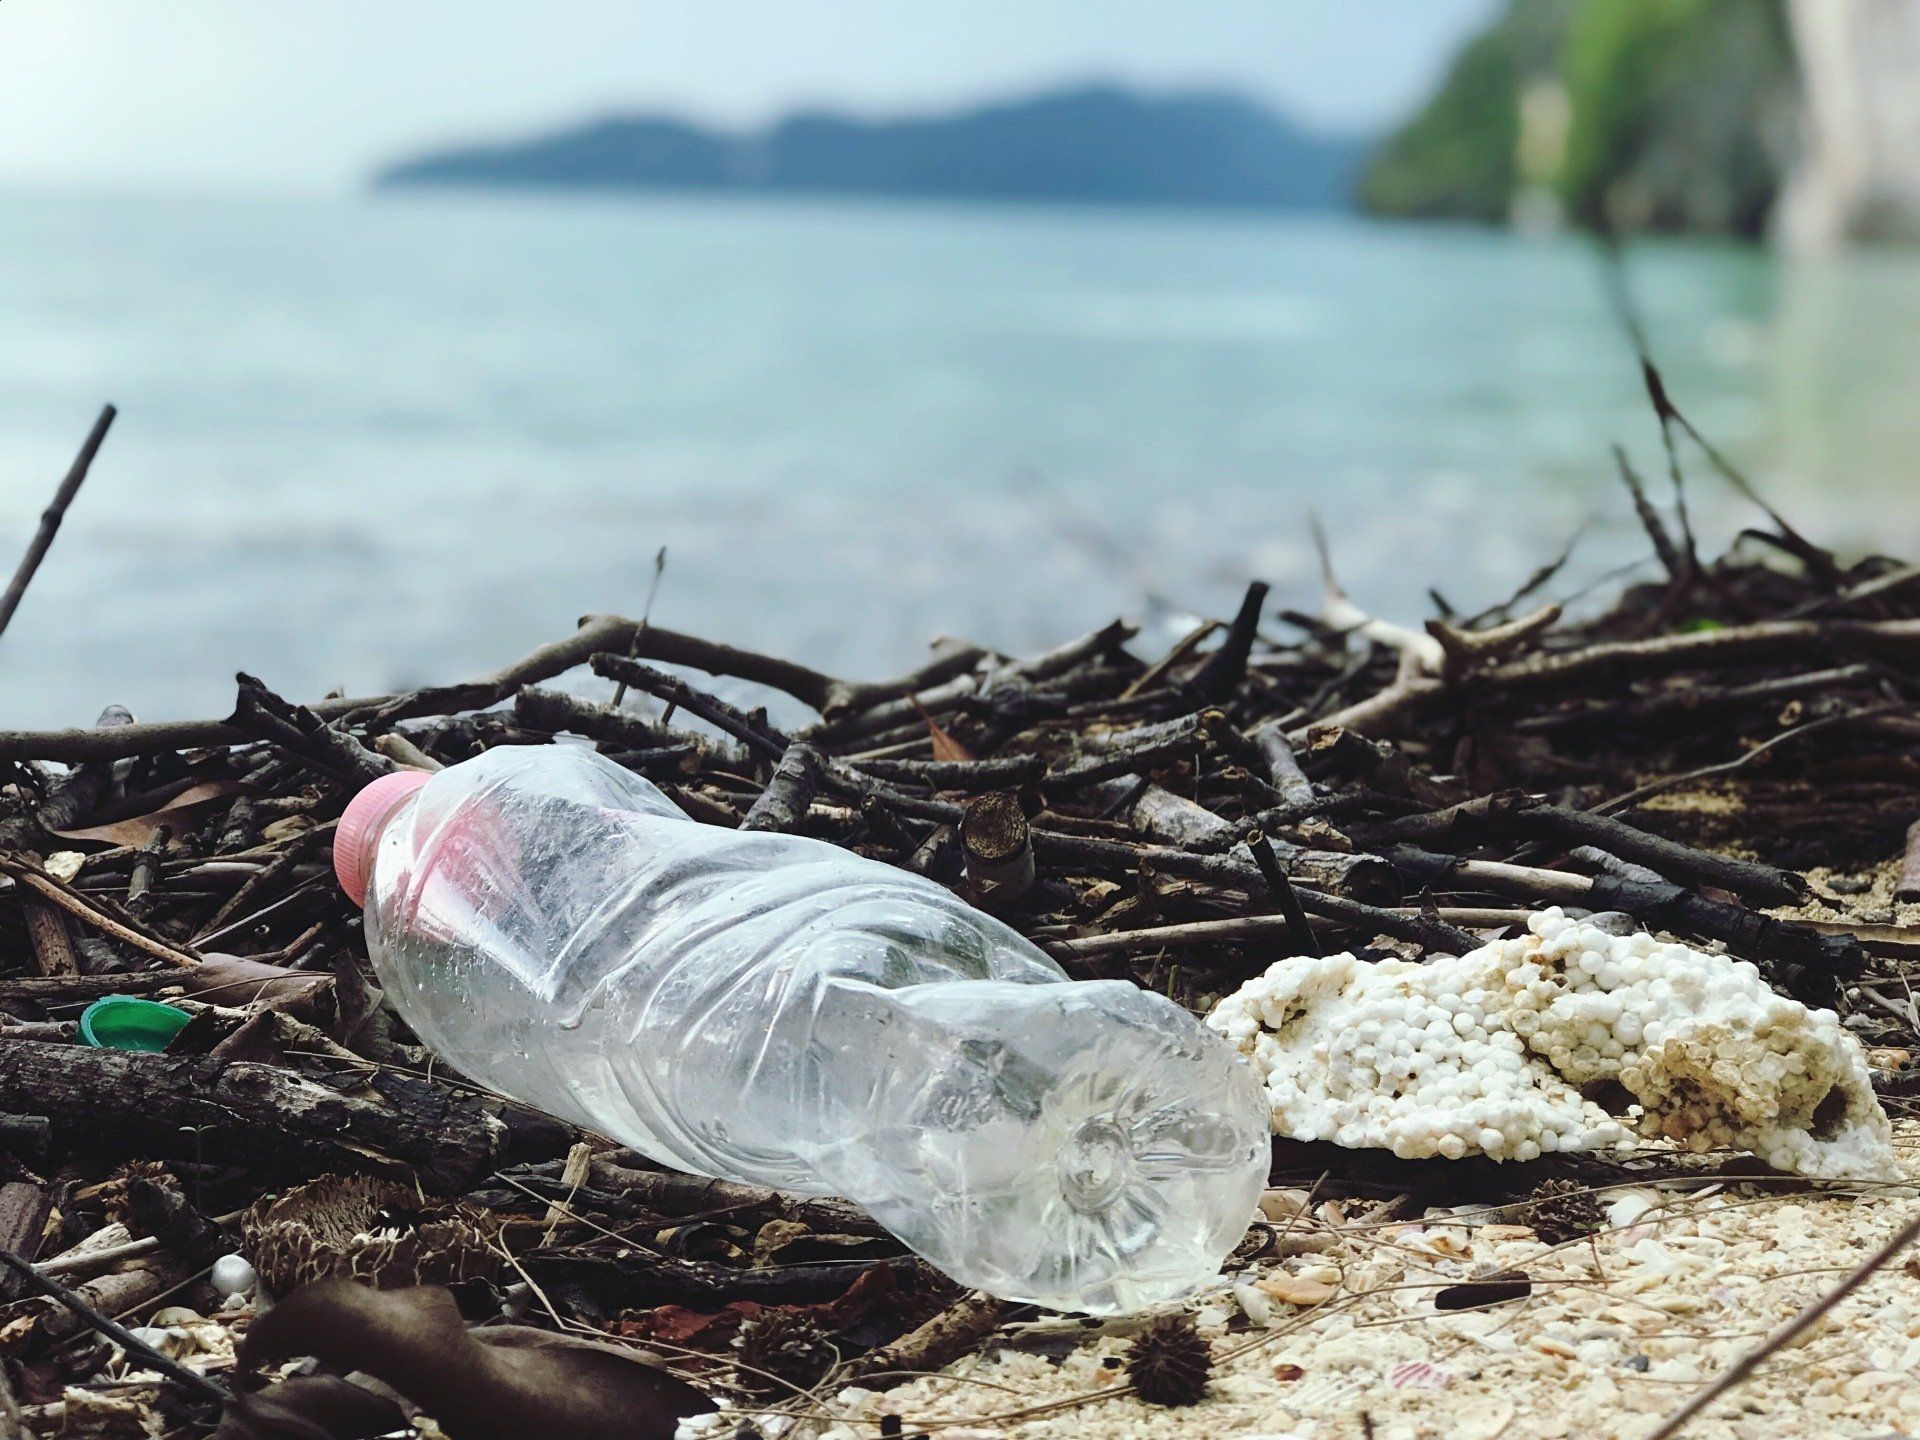 Discarded plastic bottle on lake shore.